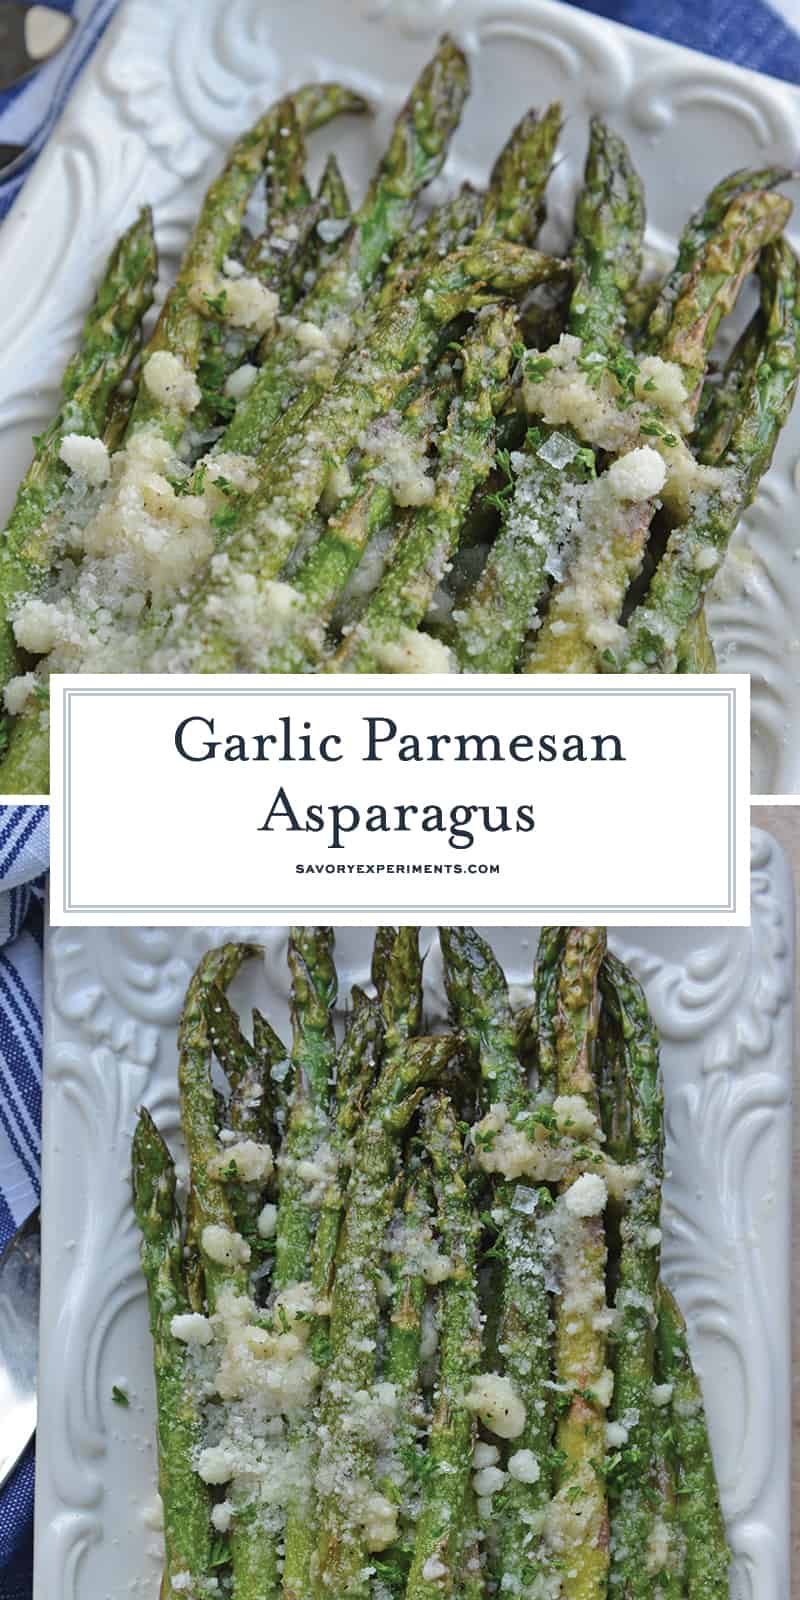 Garlic Parmesan Asparagus for Pinterest